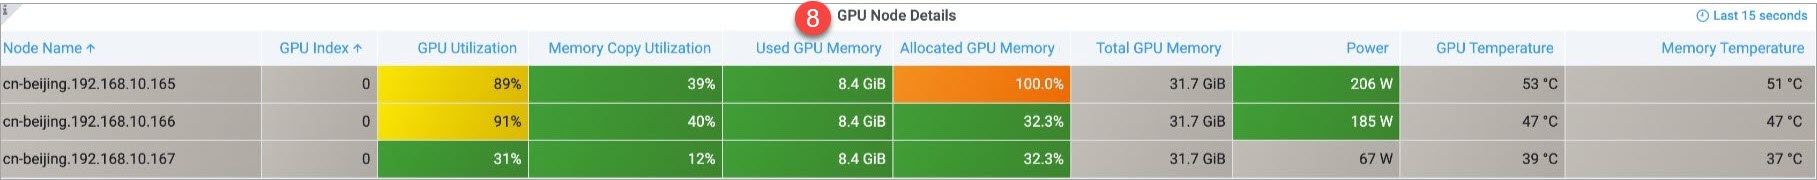 GPU Node Details